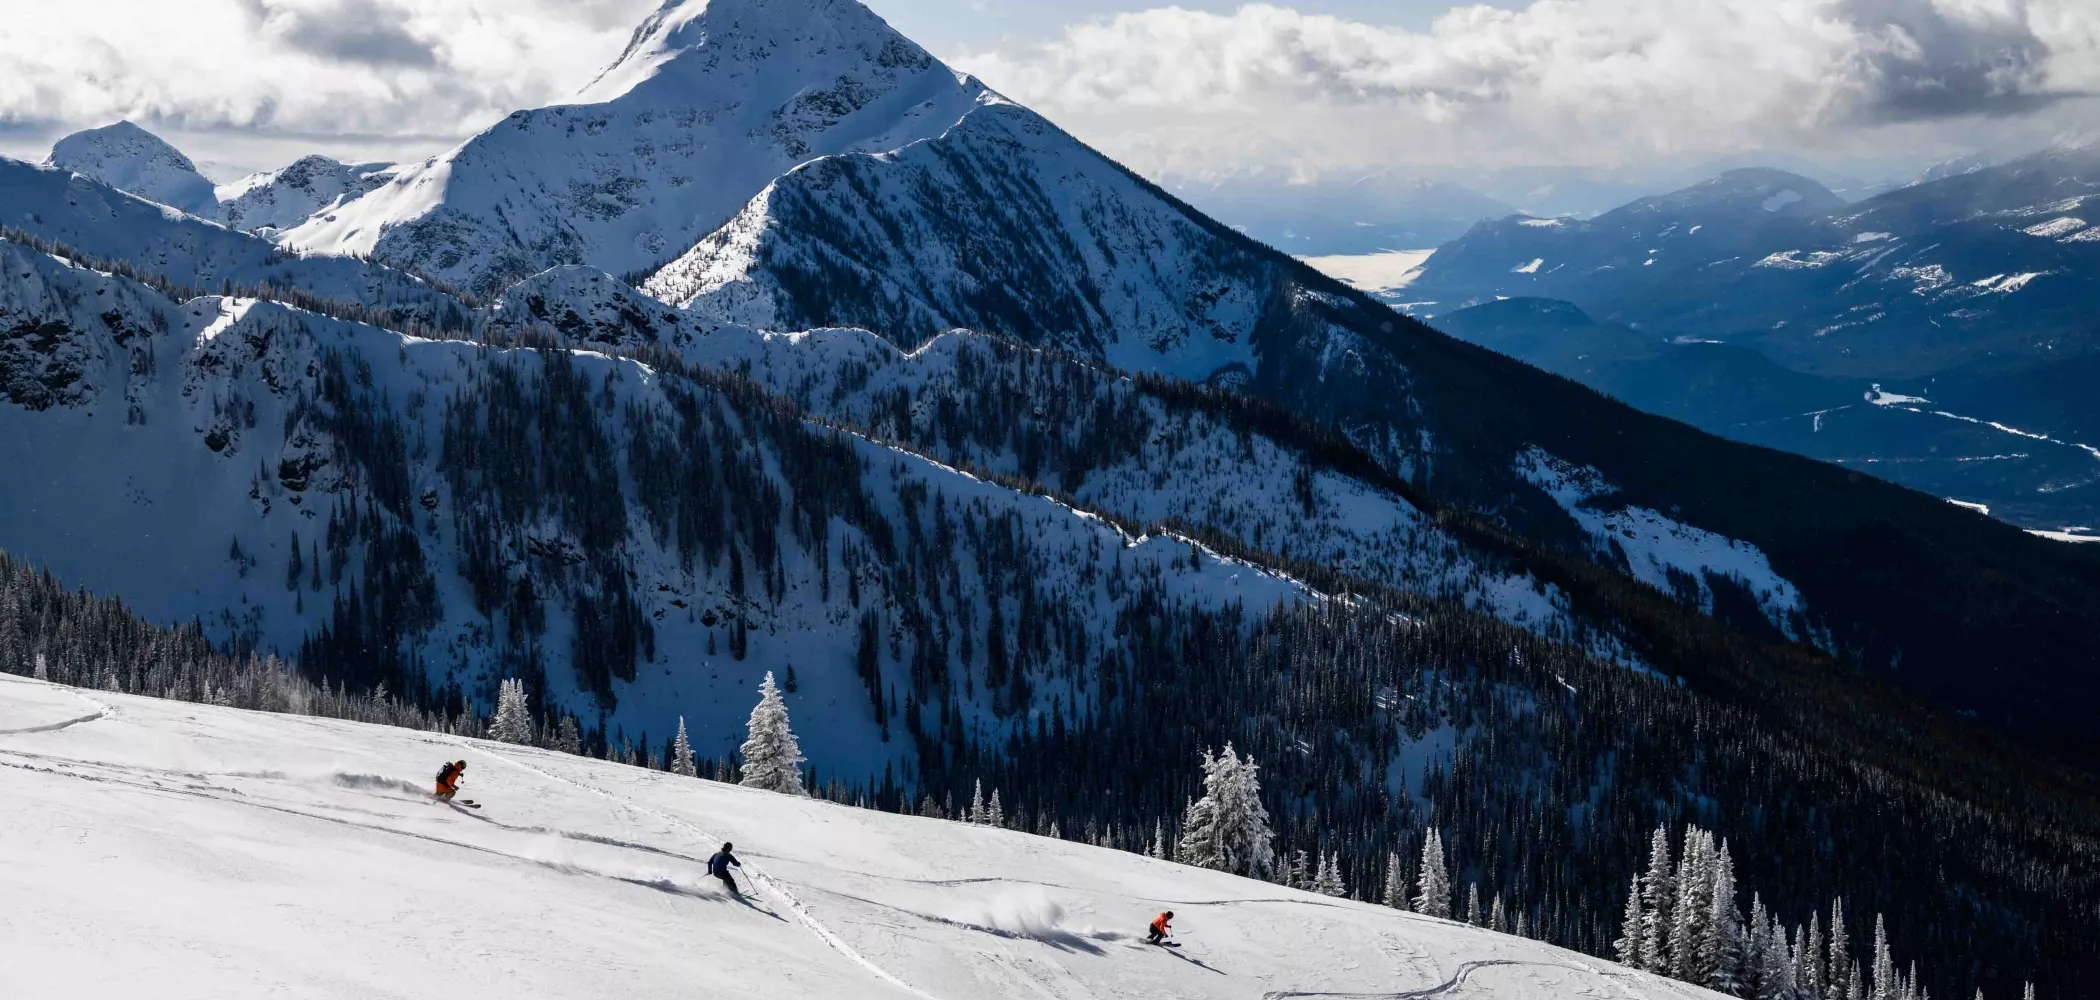 Revelstoke Ski Resort in Canada, North America | Snowboarding,Skiing - Rated 4.5